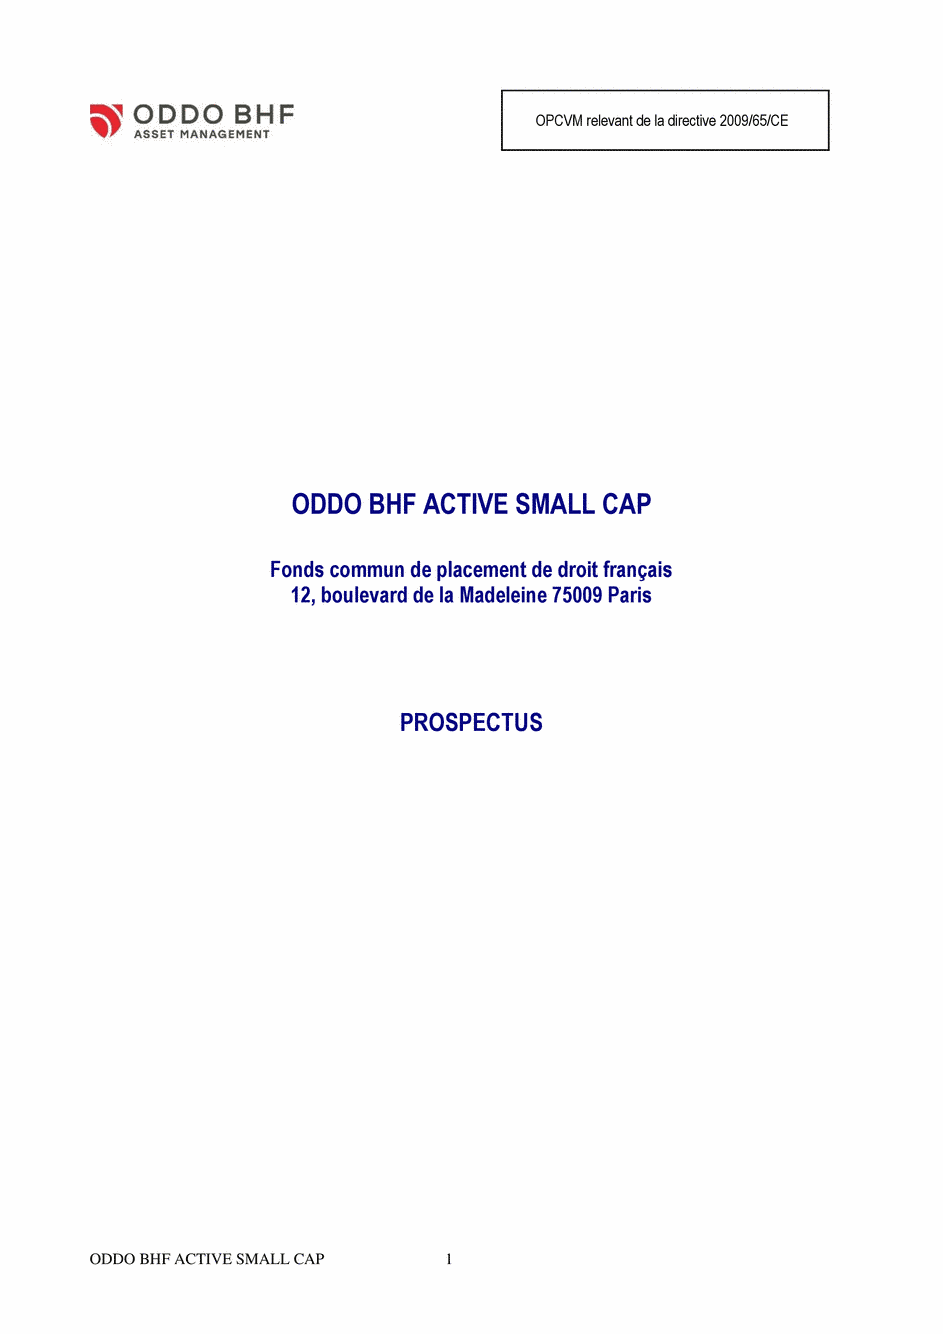 Prospectus ODDO BHF ACTIVE SMALL CAP CR-EUR - 25/09/2020 - Français